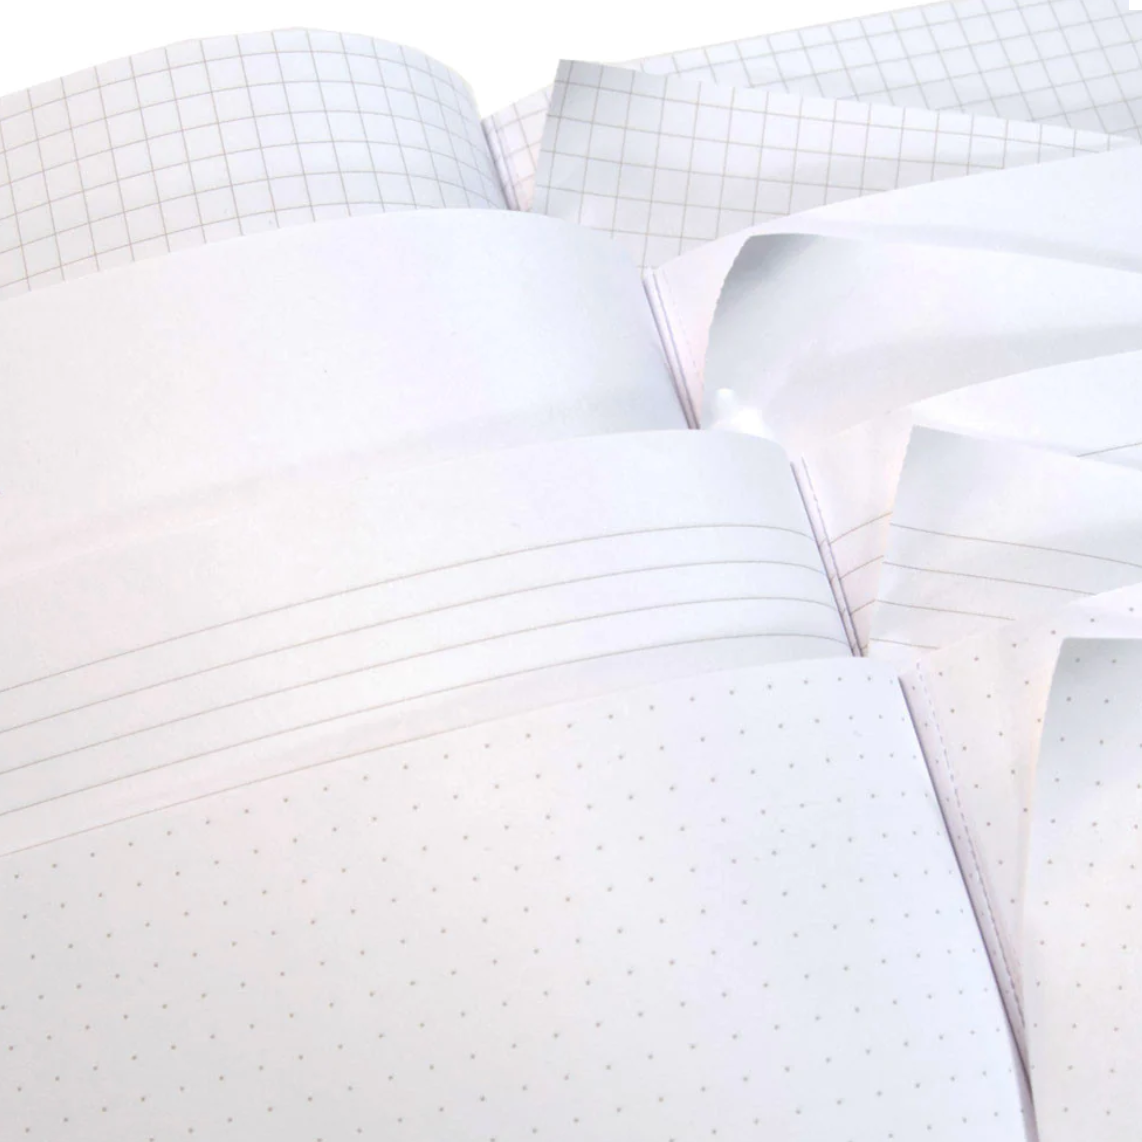 Foil Stamped Field Notebooks 5 x 8